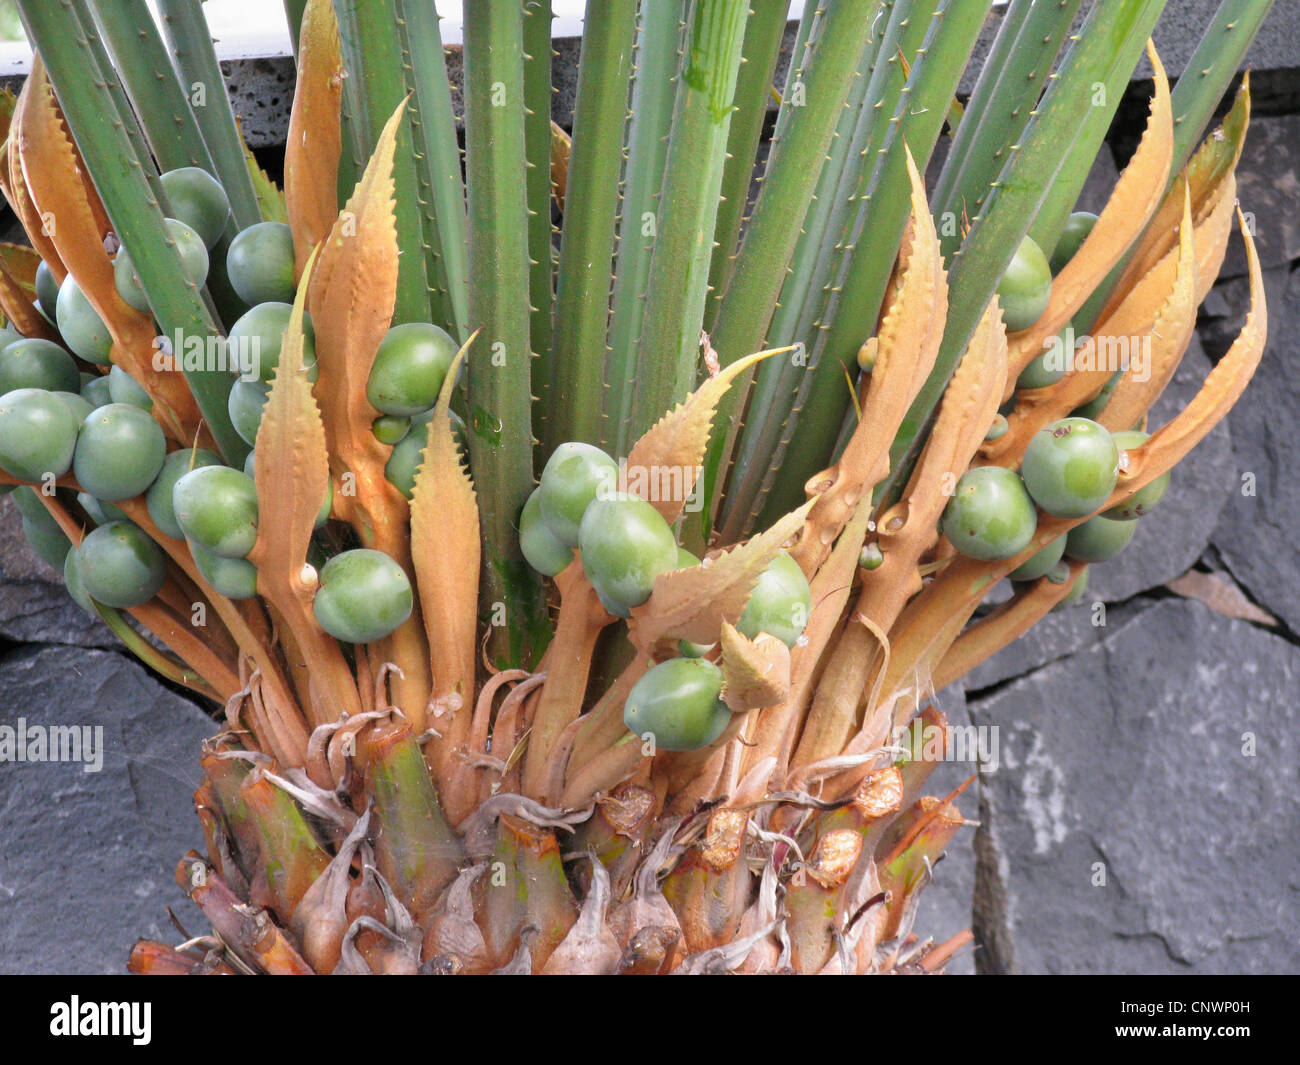 fern palm (Cycas circinalis), young seeds Stock Photo